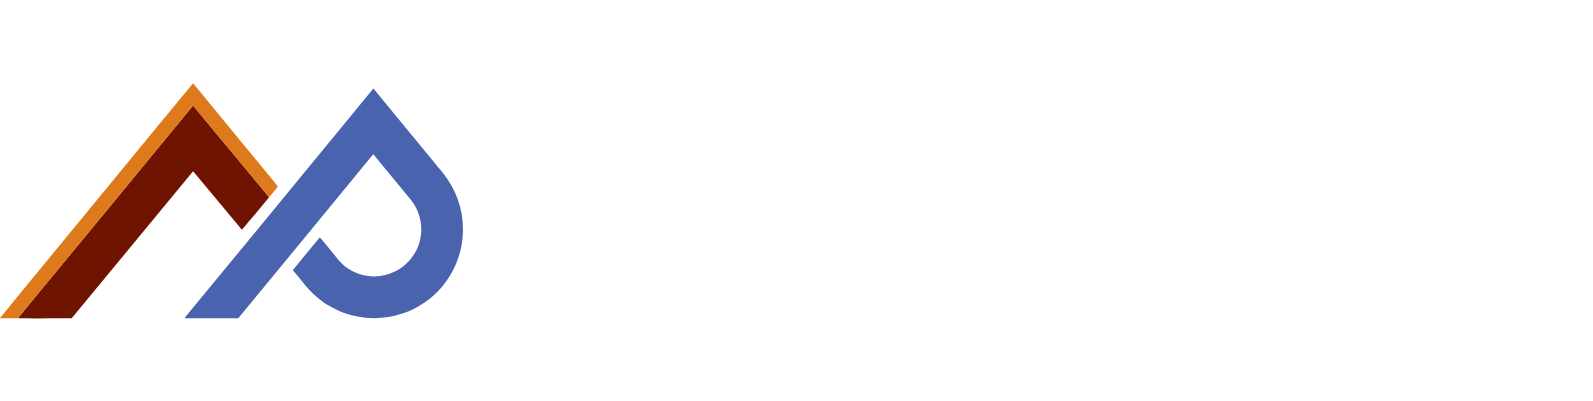 NewAmsterdam Pharma Company Logo groß für dunkle Hintergründe (transparentes PNG)